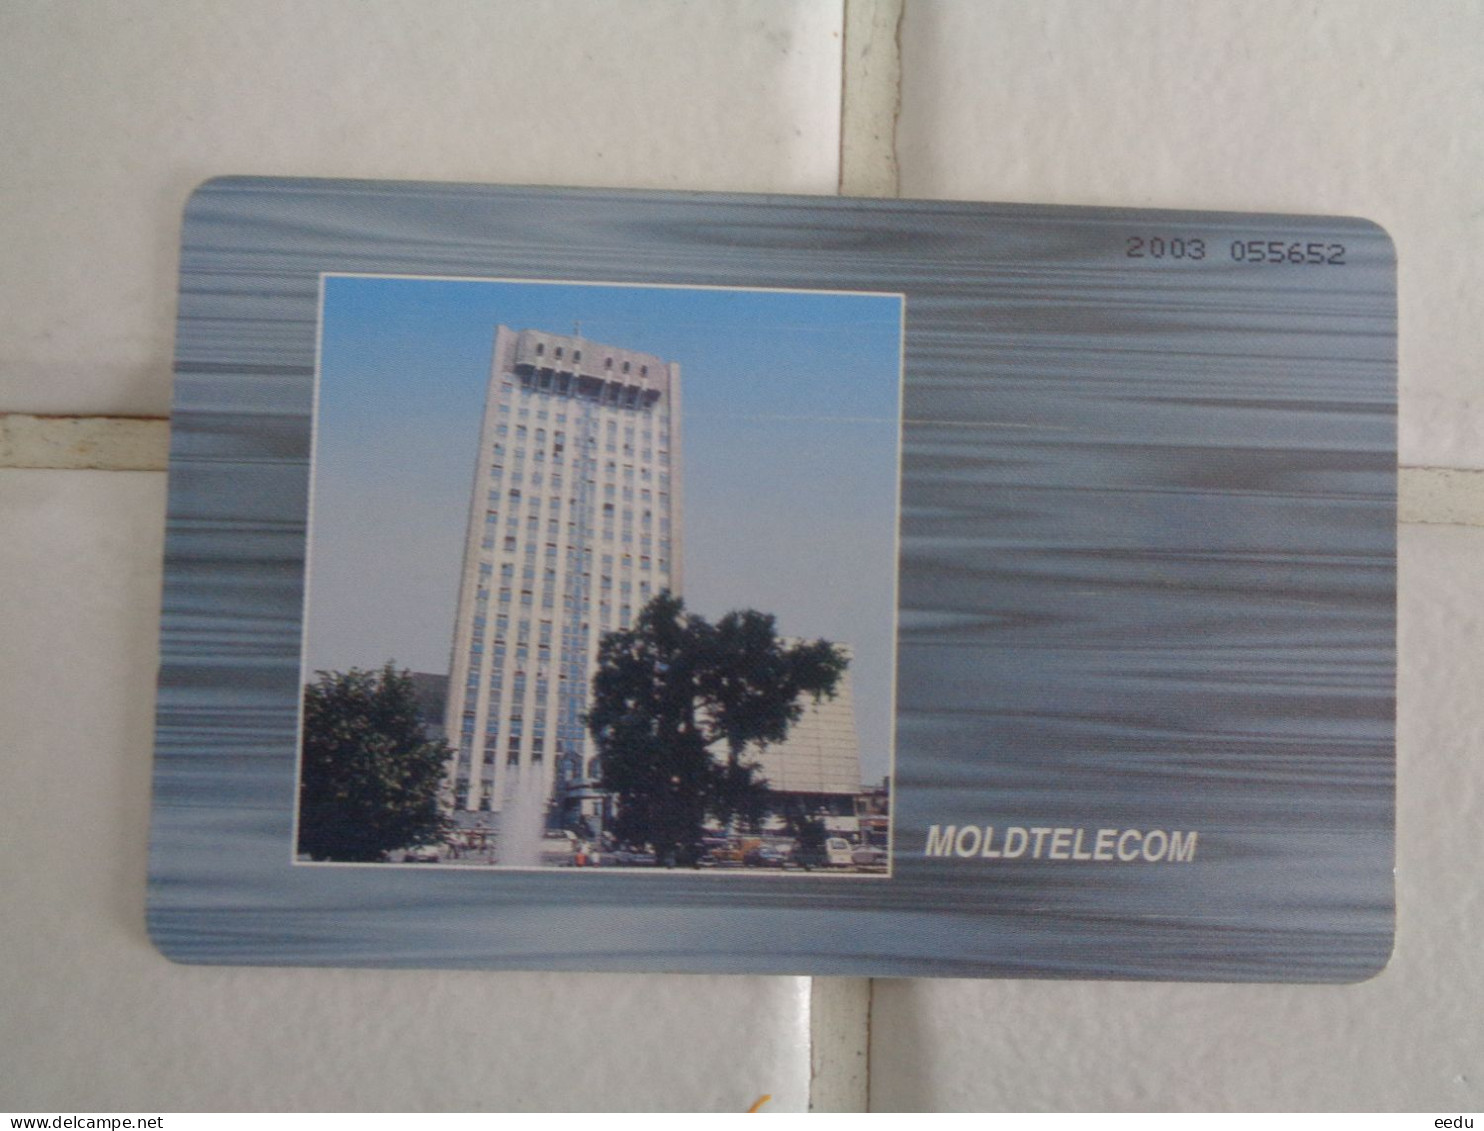 Moldova Phonecard - Moldawien (Moldau)